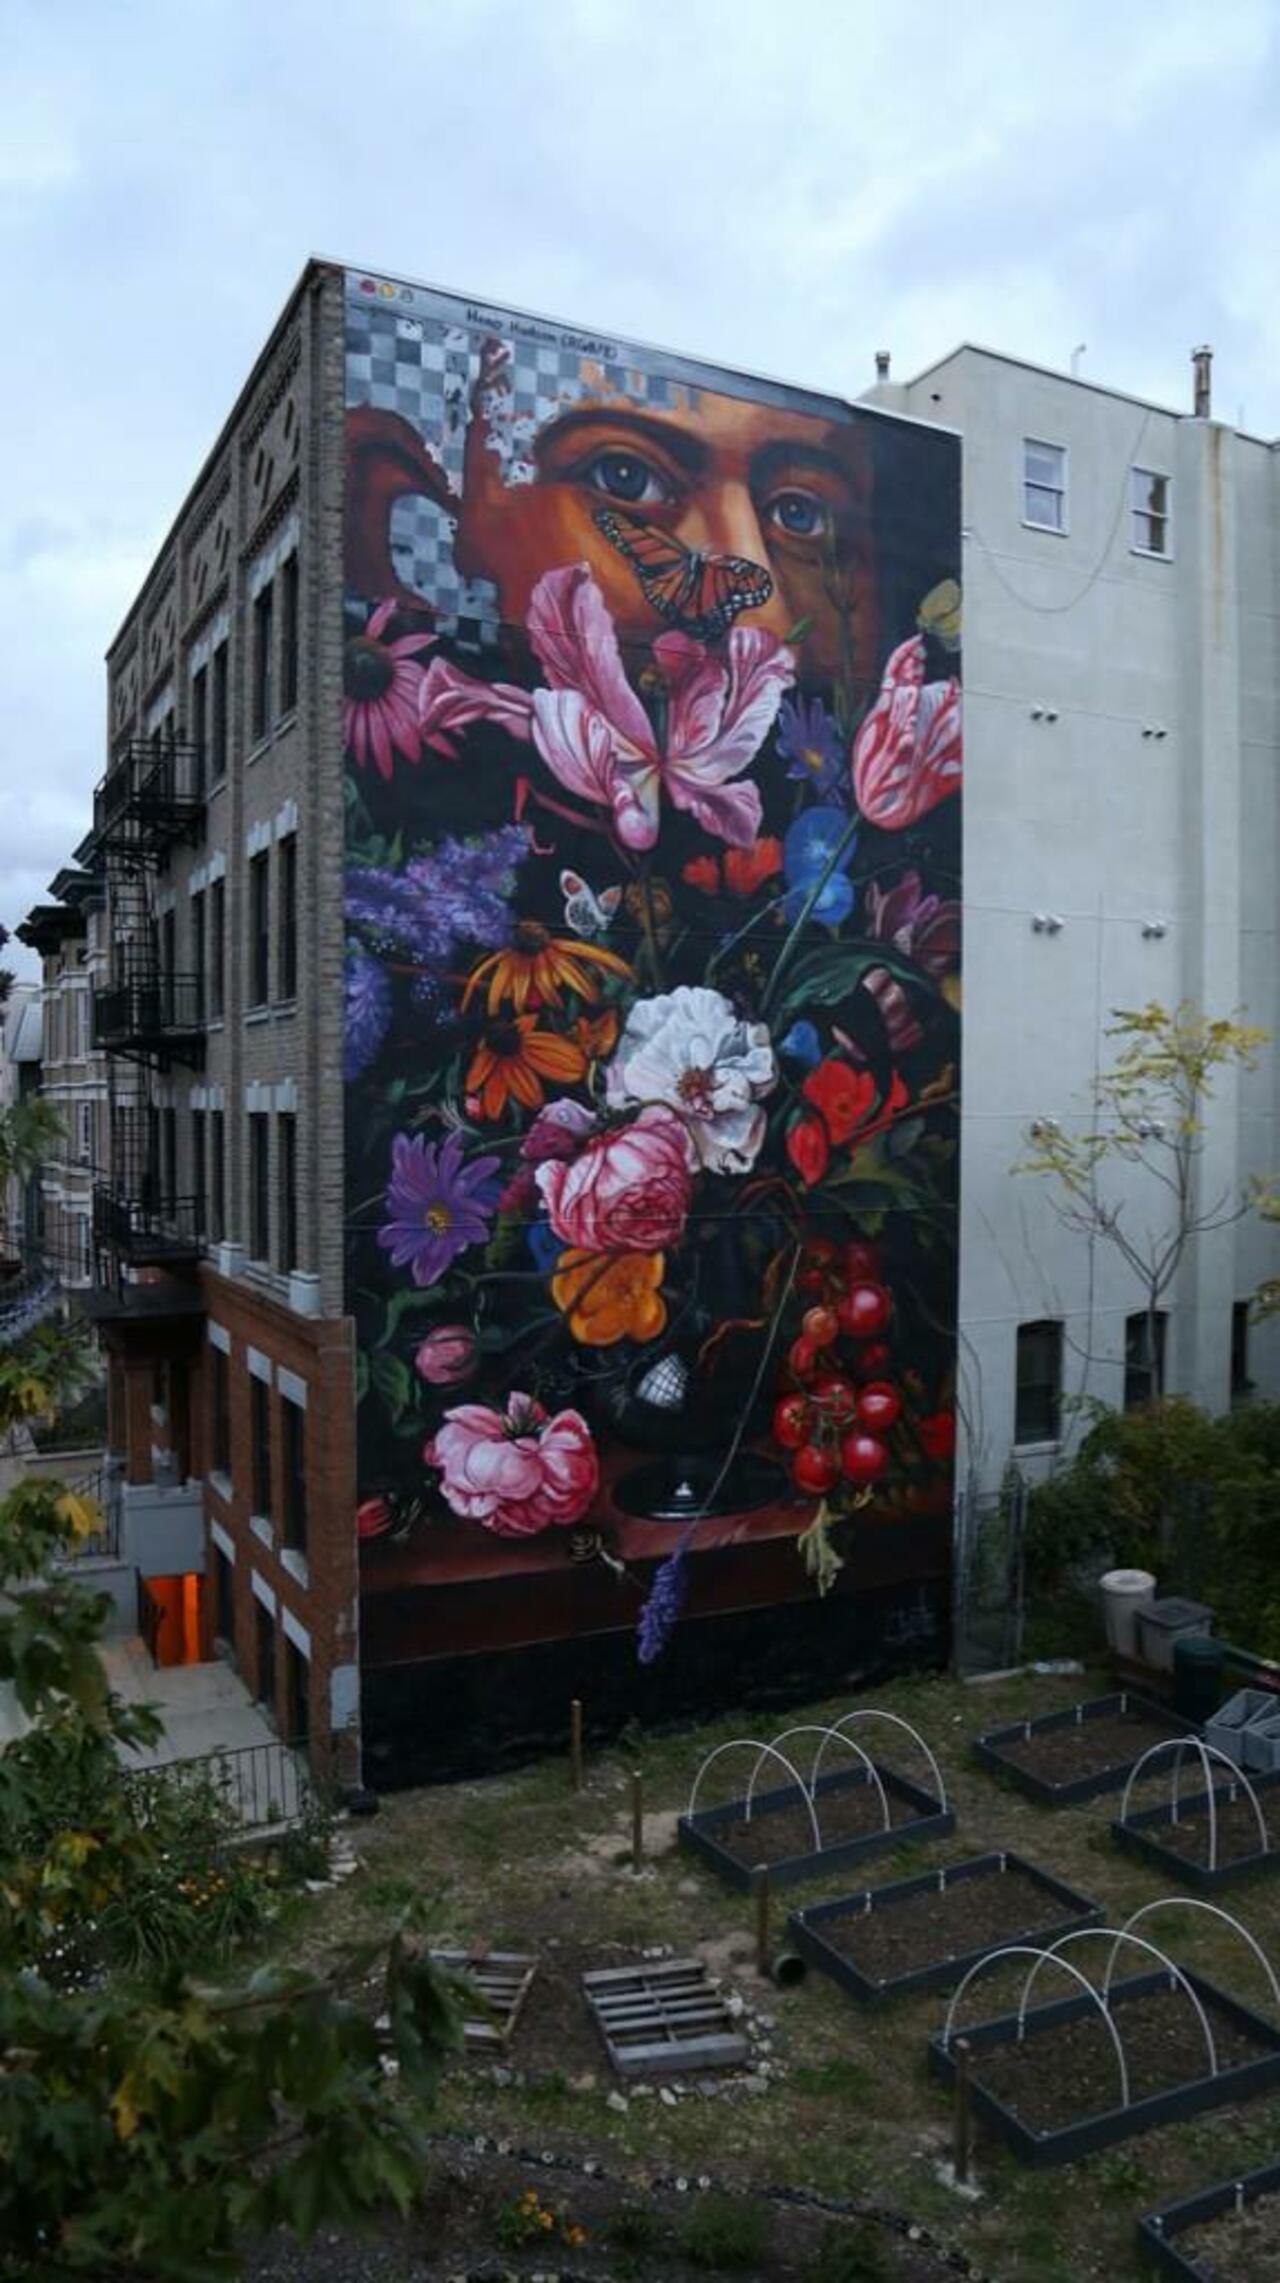 Beautiful Street Art mural by the artist Gaia in Jersey City, NJ 

#art #graffiti #arte #streetart http://t.co/13Tde5DArp